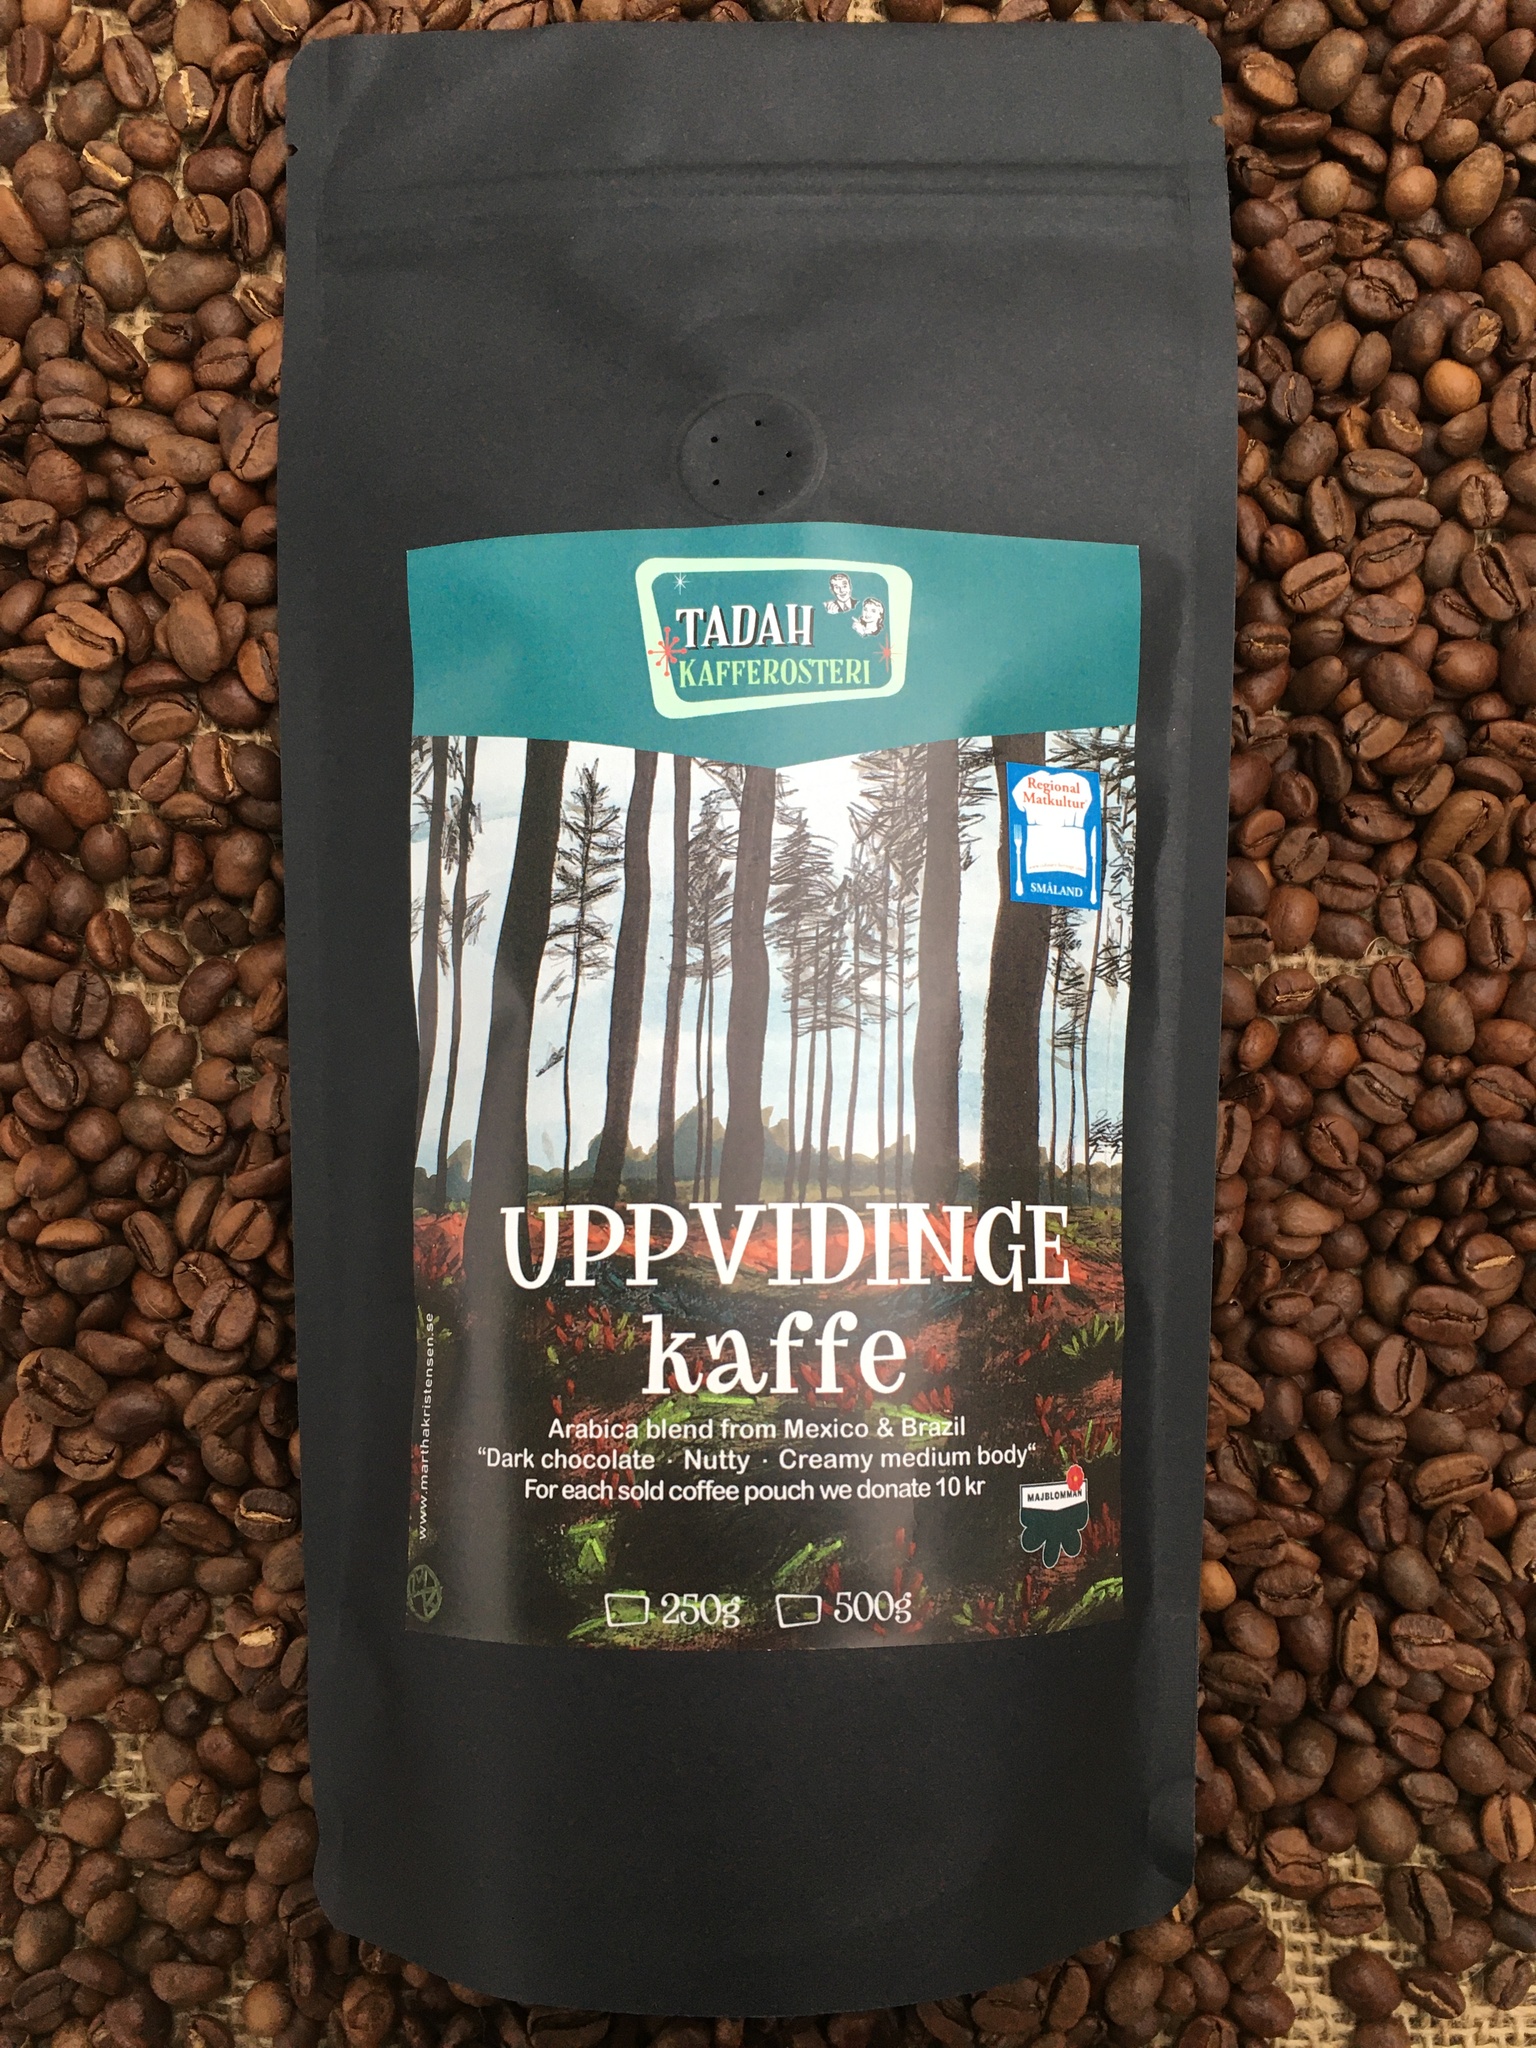 "Uppvidinge kaffe" | coffee blend